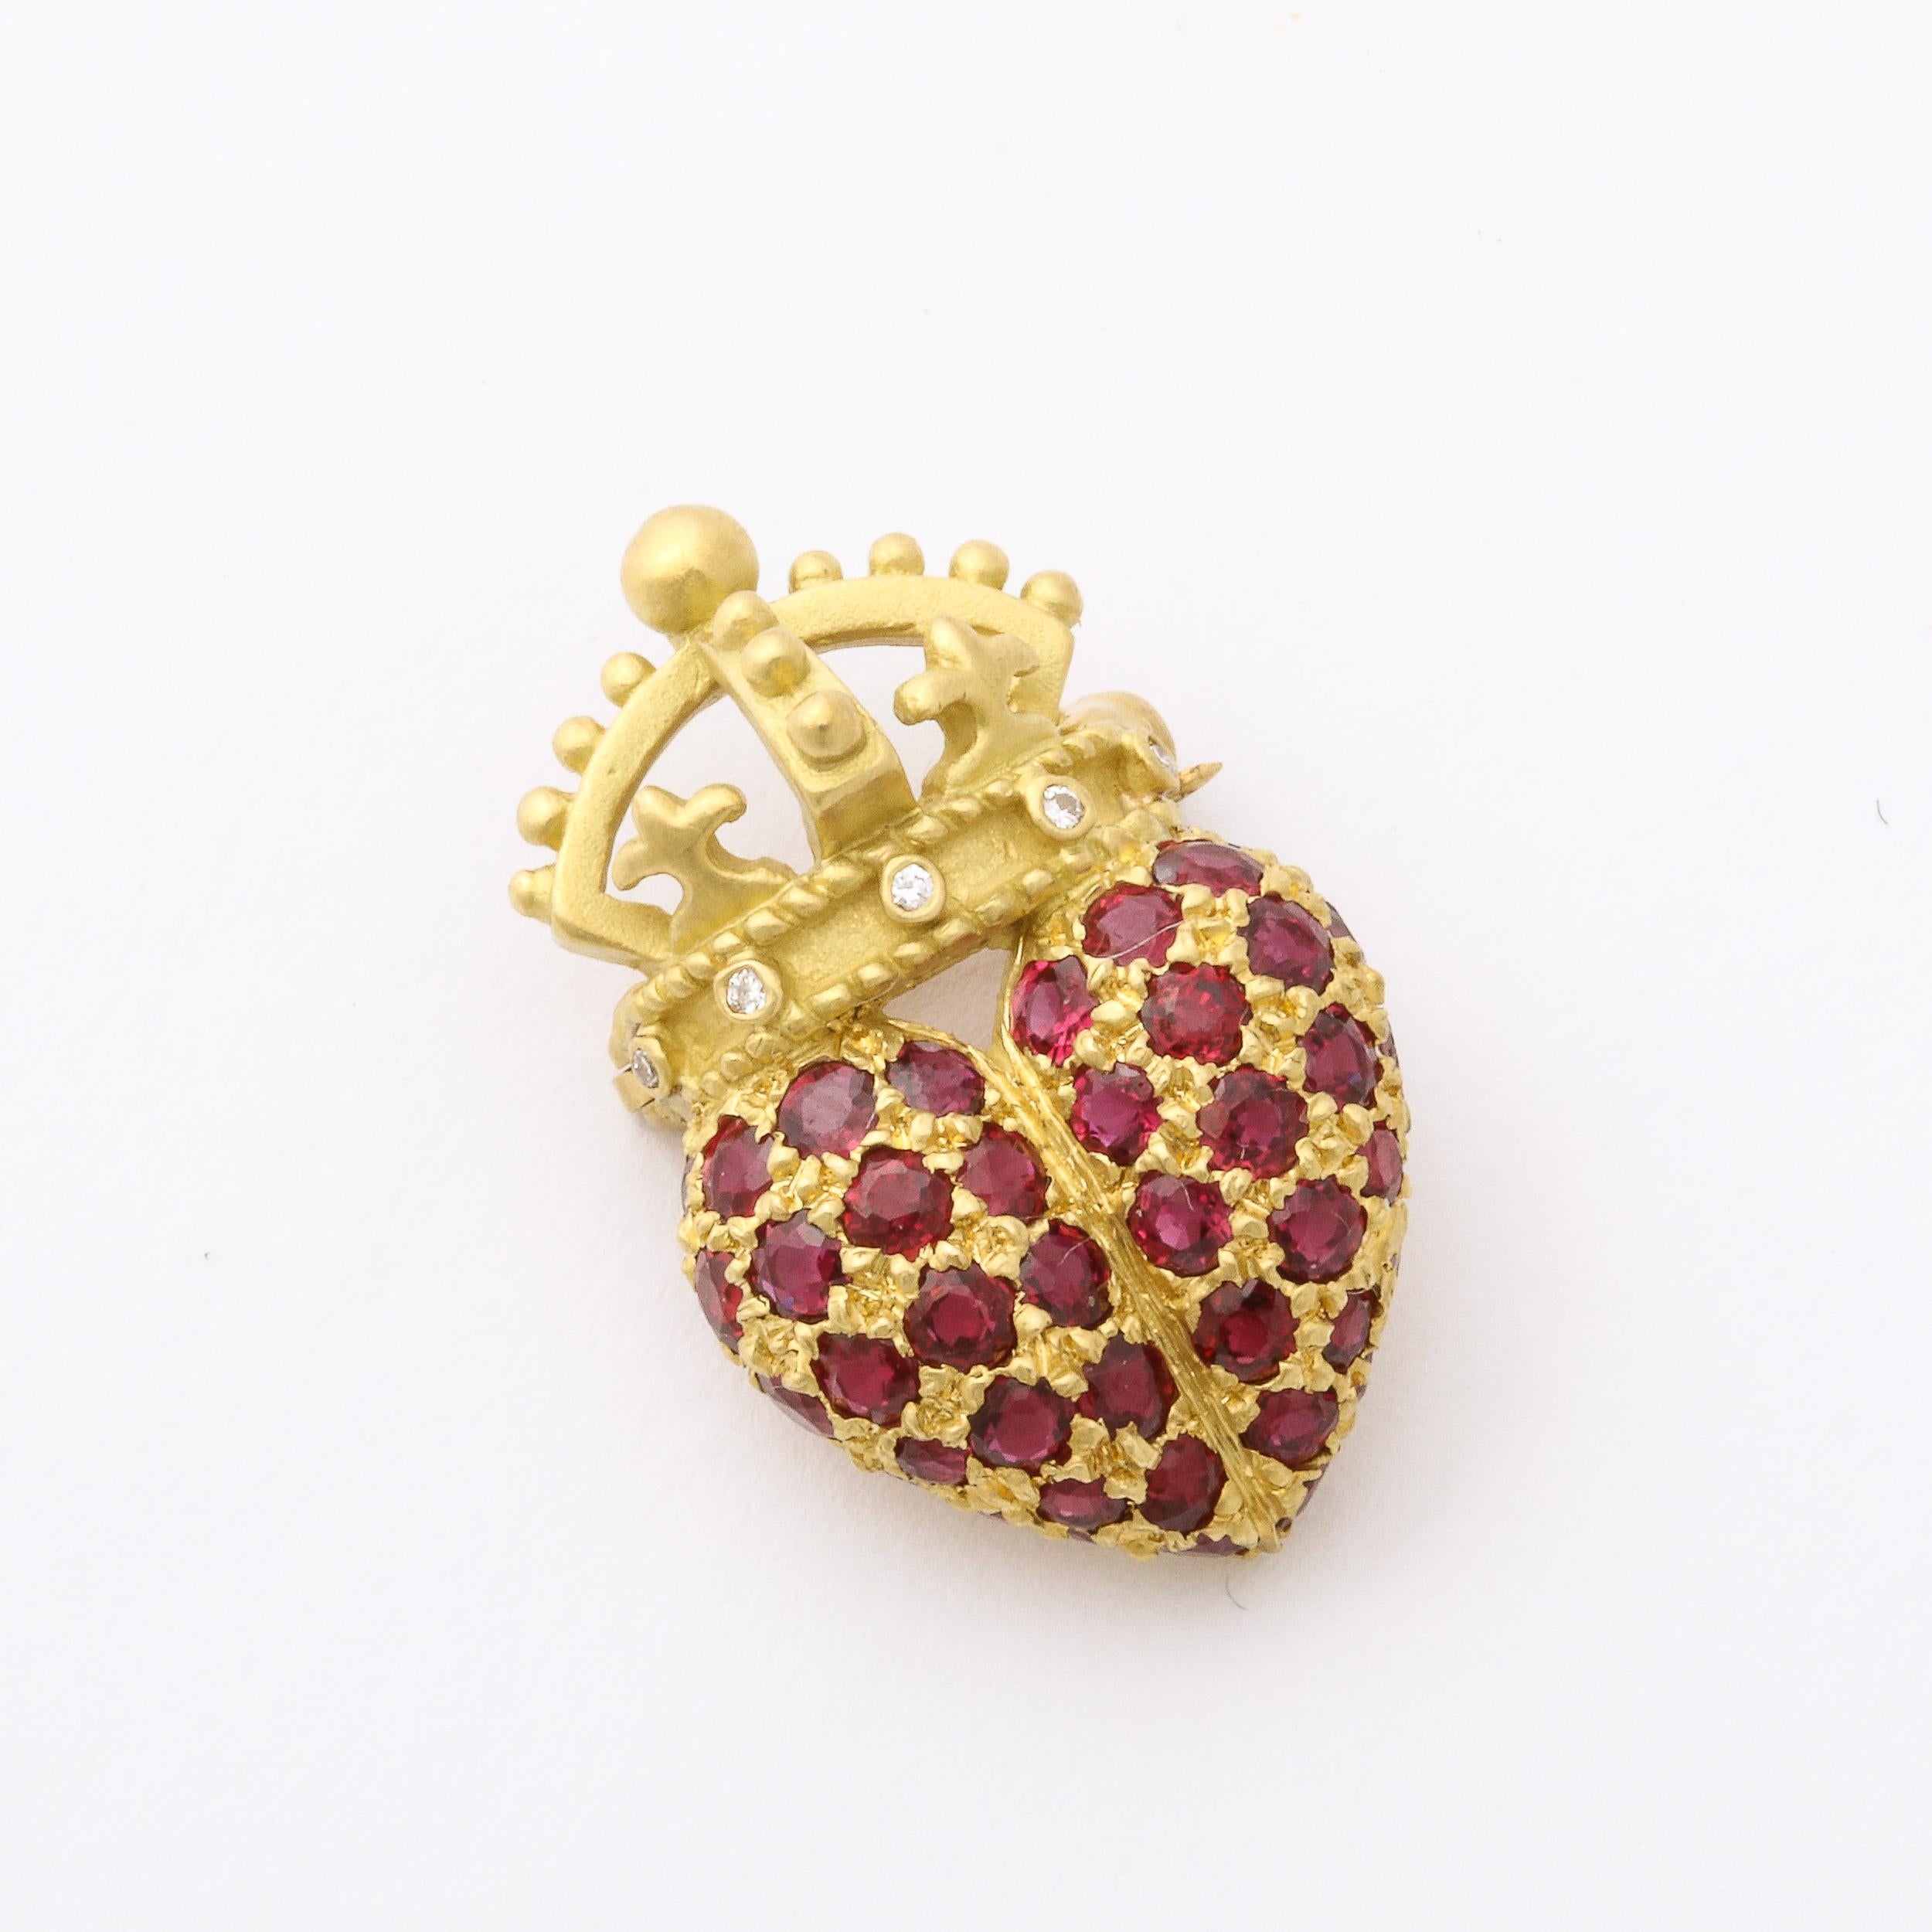 Modernist In the manner of Kieselstein-Cord Royal Hearts 18k Ruby & Diamond Heart Brooch